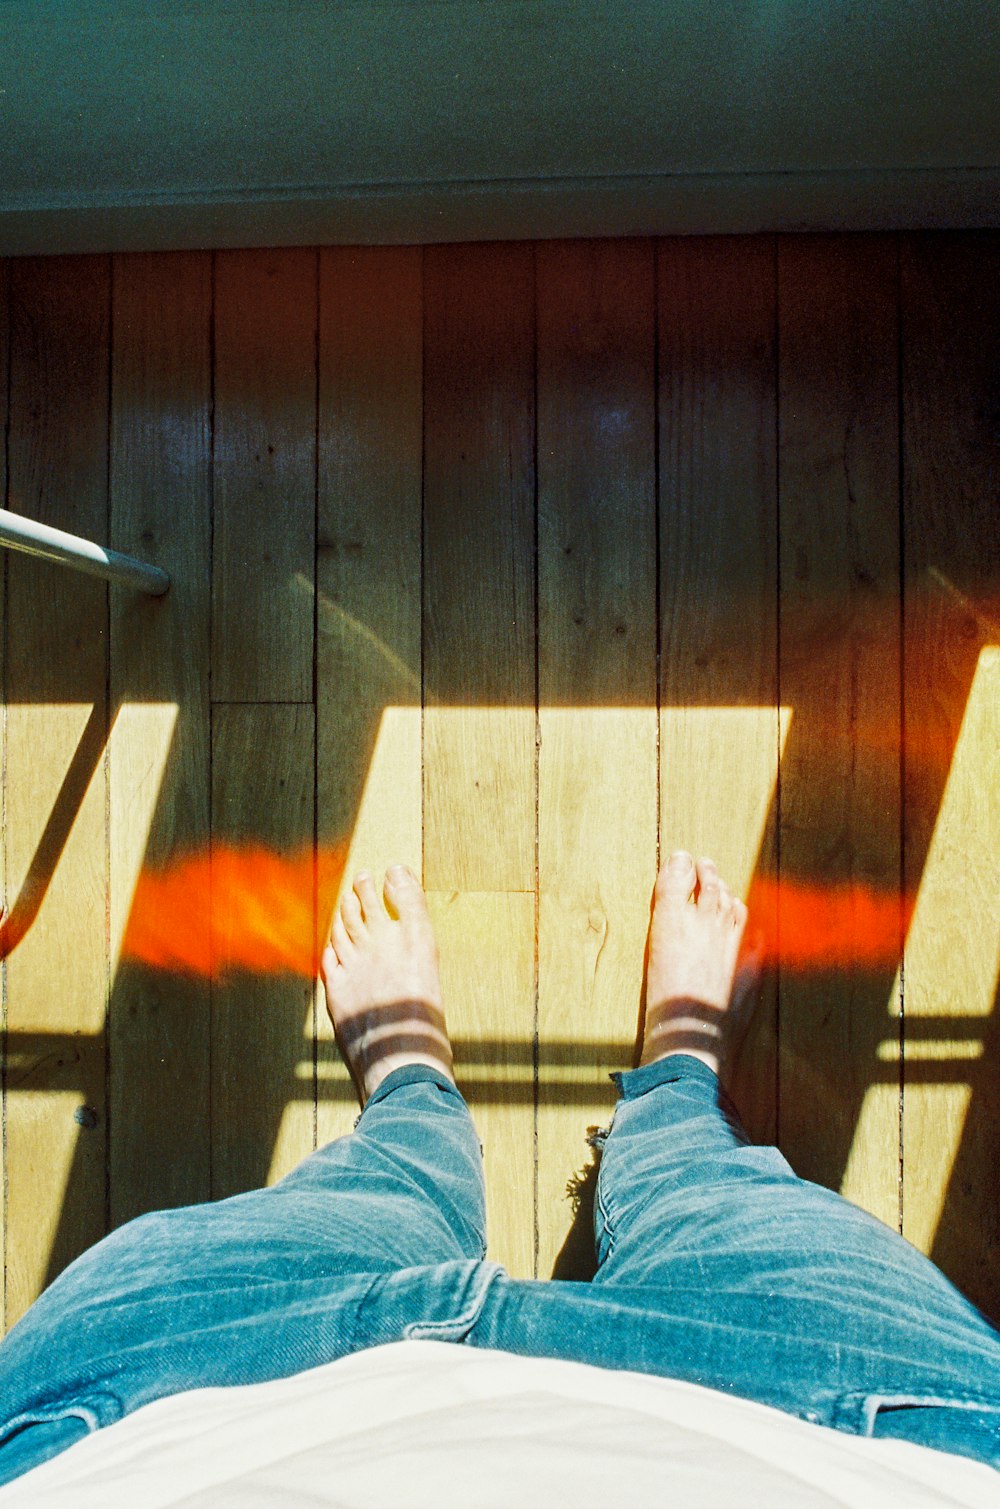 Persona en jeans de mezclilla azul de pie sobre piso de madera marrón